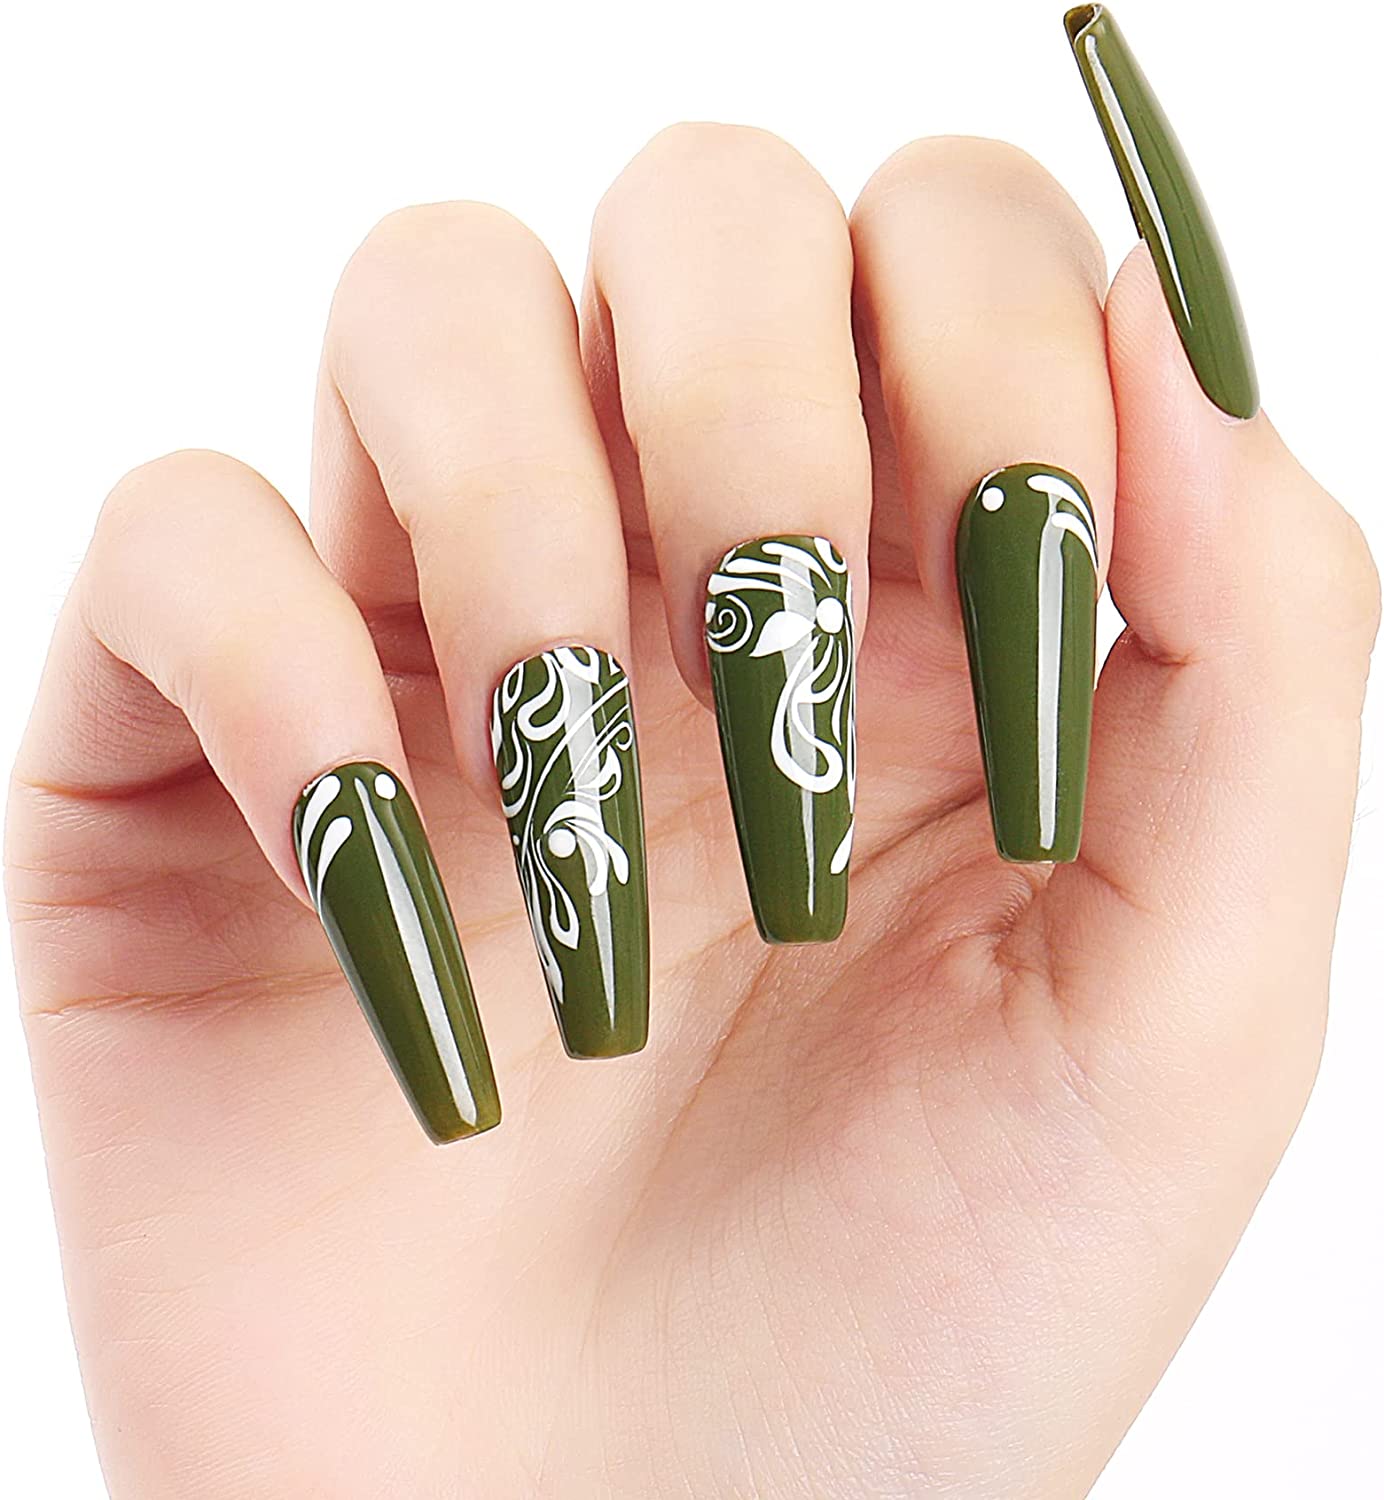 nail polish for olive skin